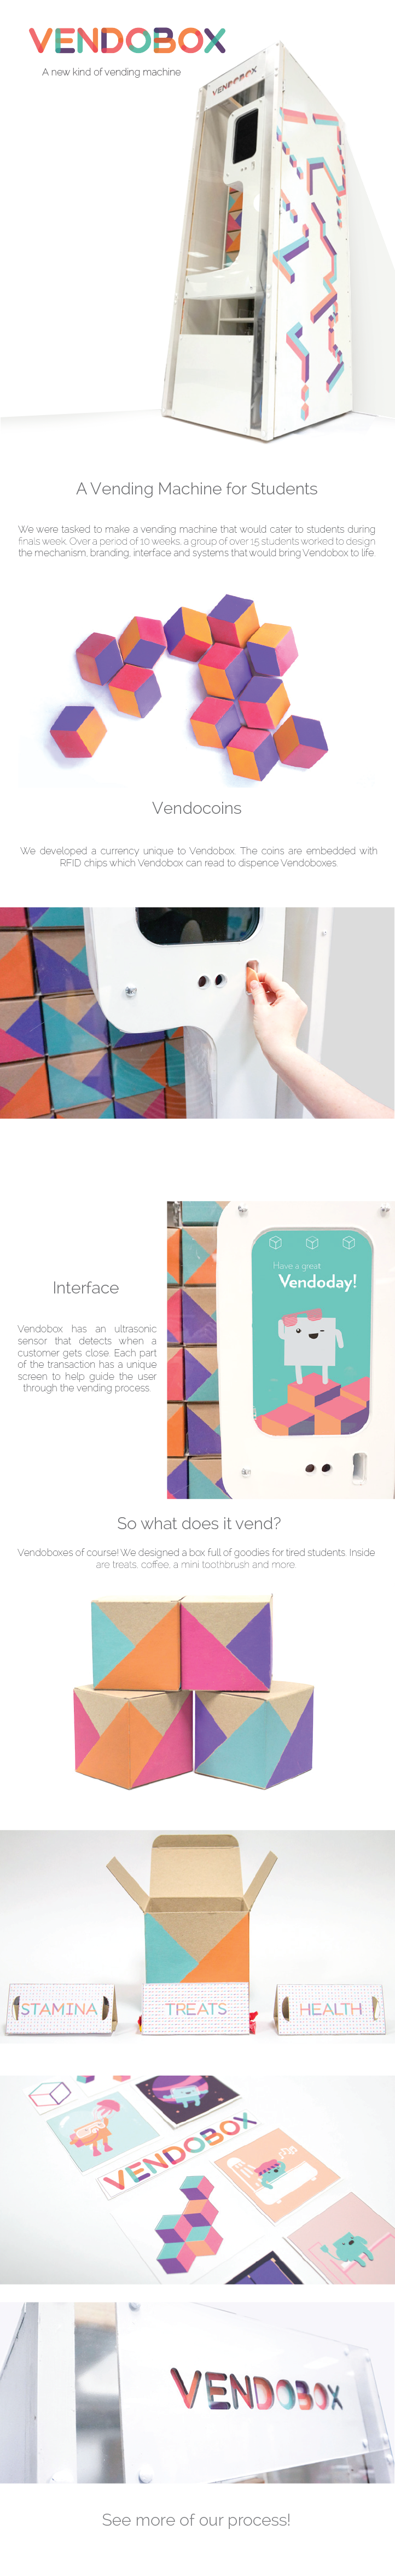 vending machine geometric cute colorful box cube coin DIY raspberri pi coding XYZ interaction service product